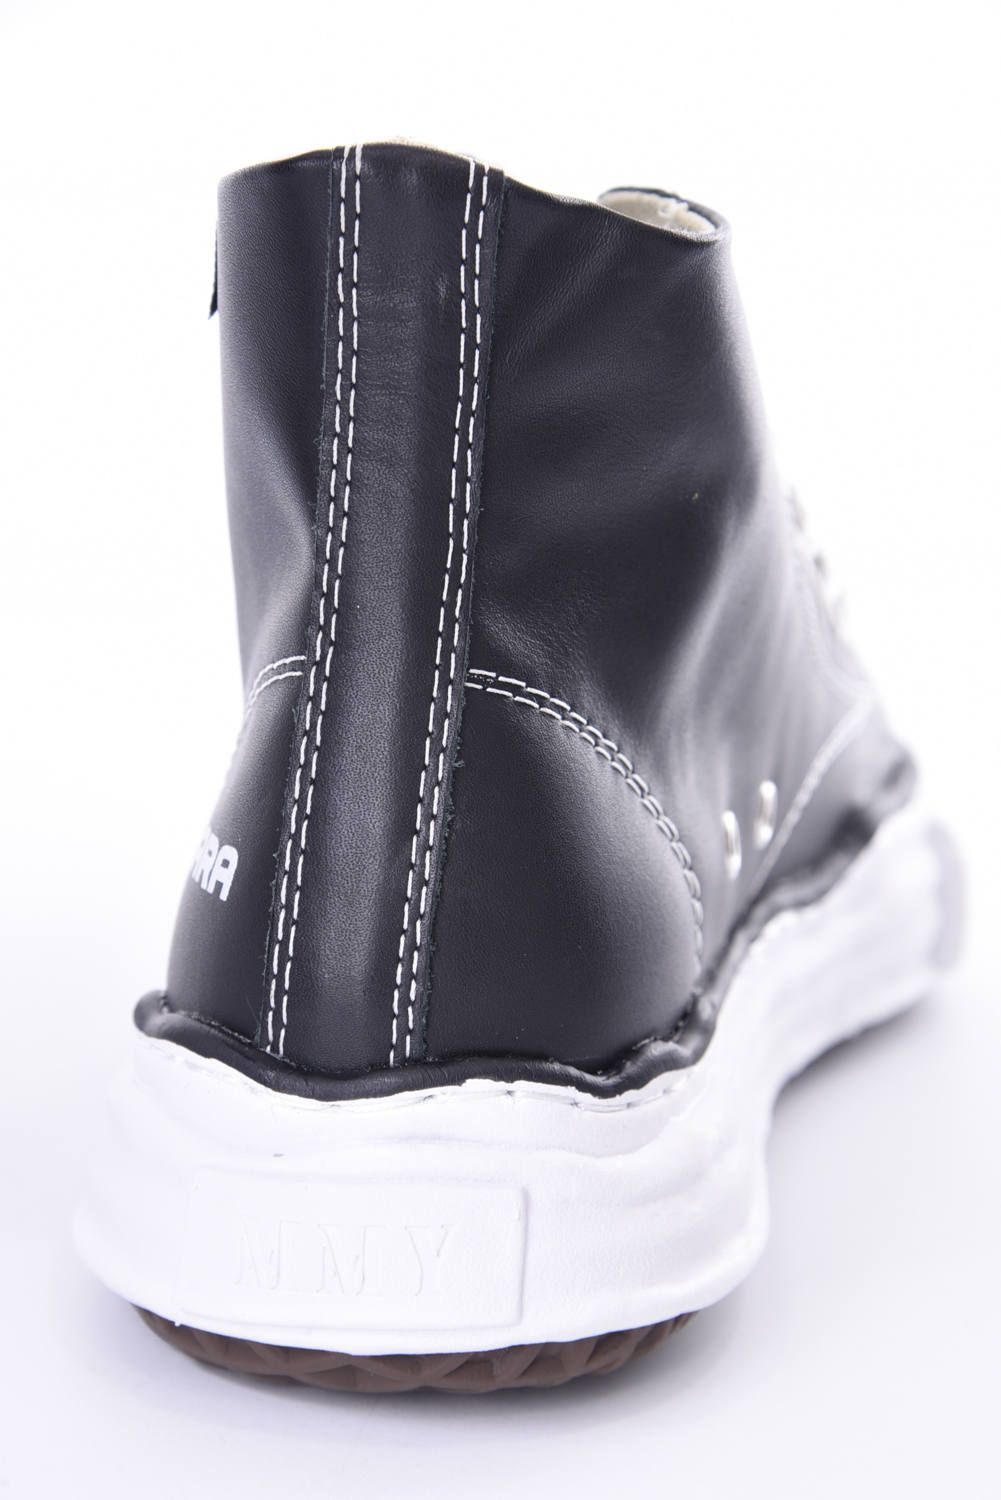 Maison MIHARA YASUHIRO - Original sole leather hitop sneaker ...